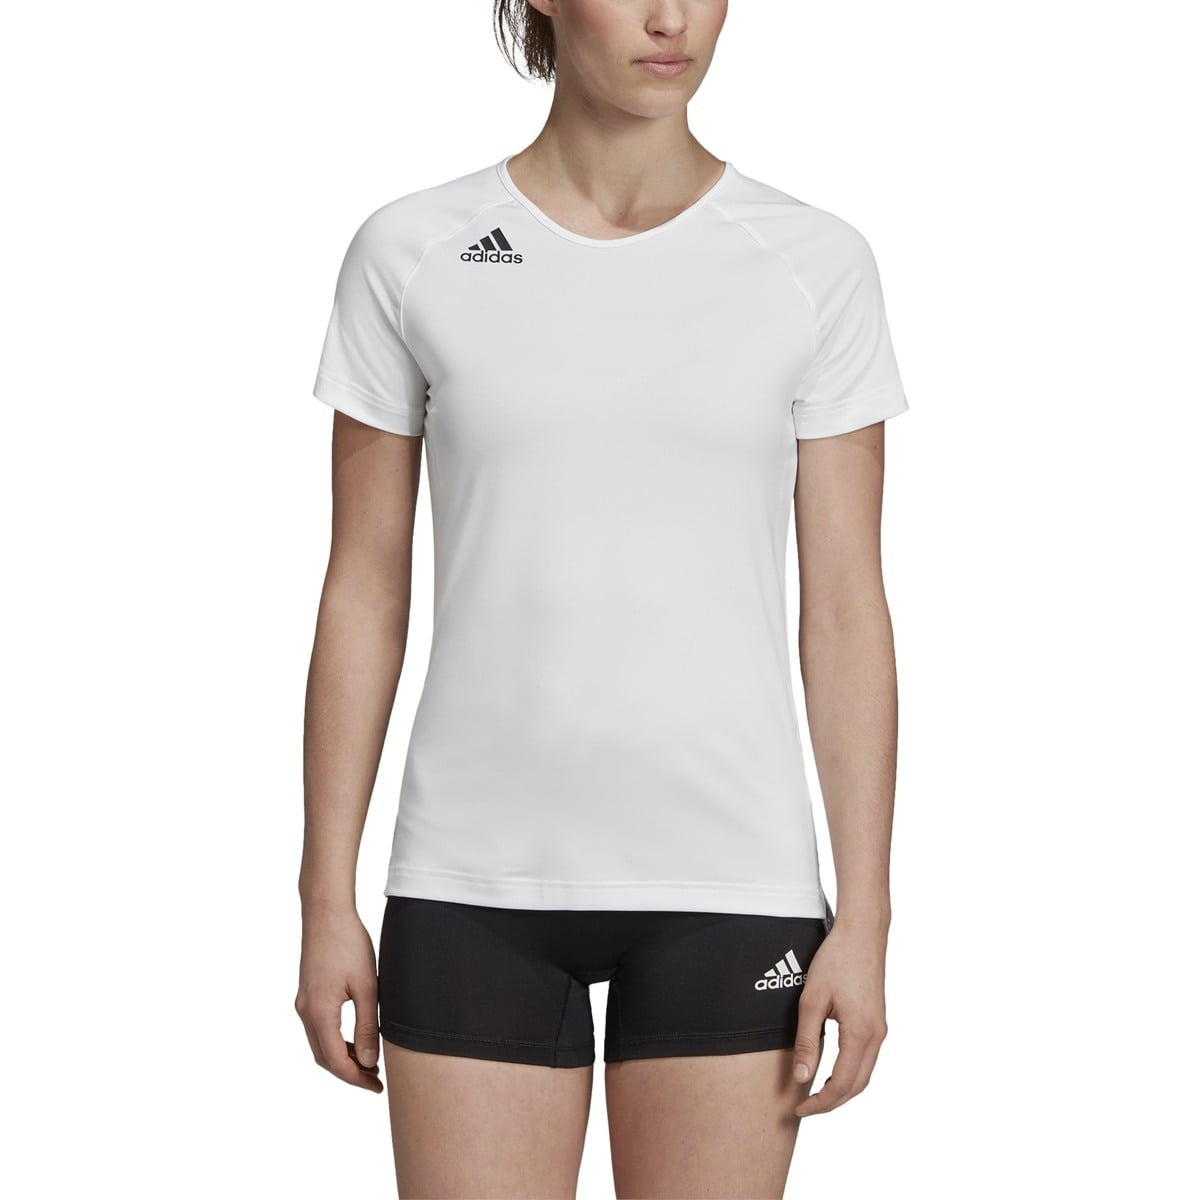 Adidas HILO Women's Short Sleeve Volleyball Jersey DP4343 - White, Black